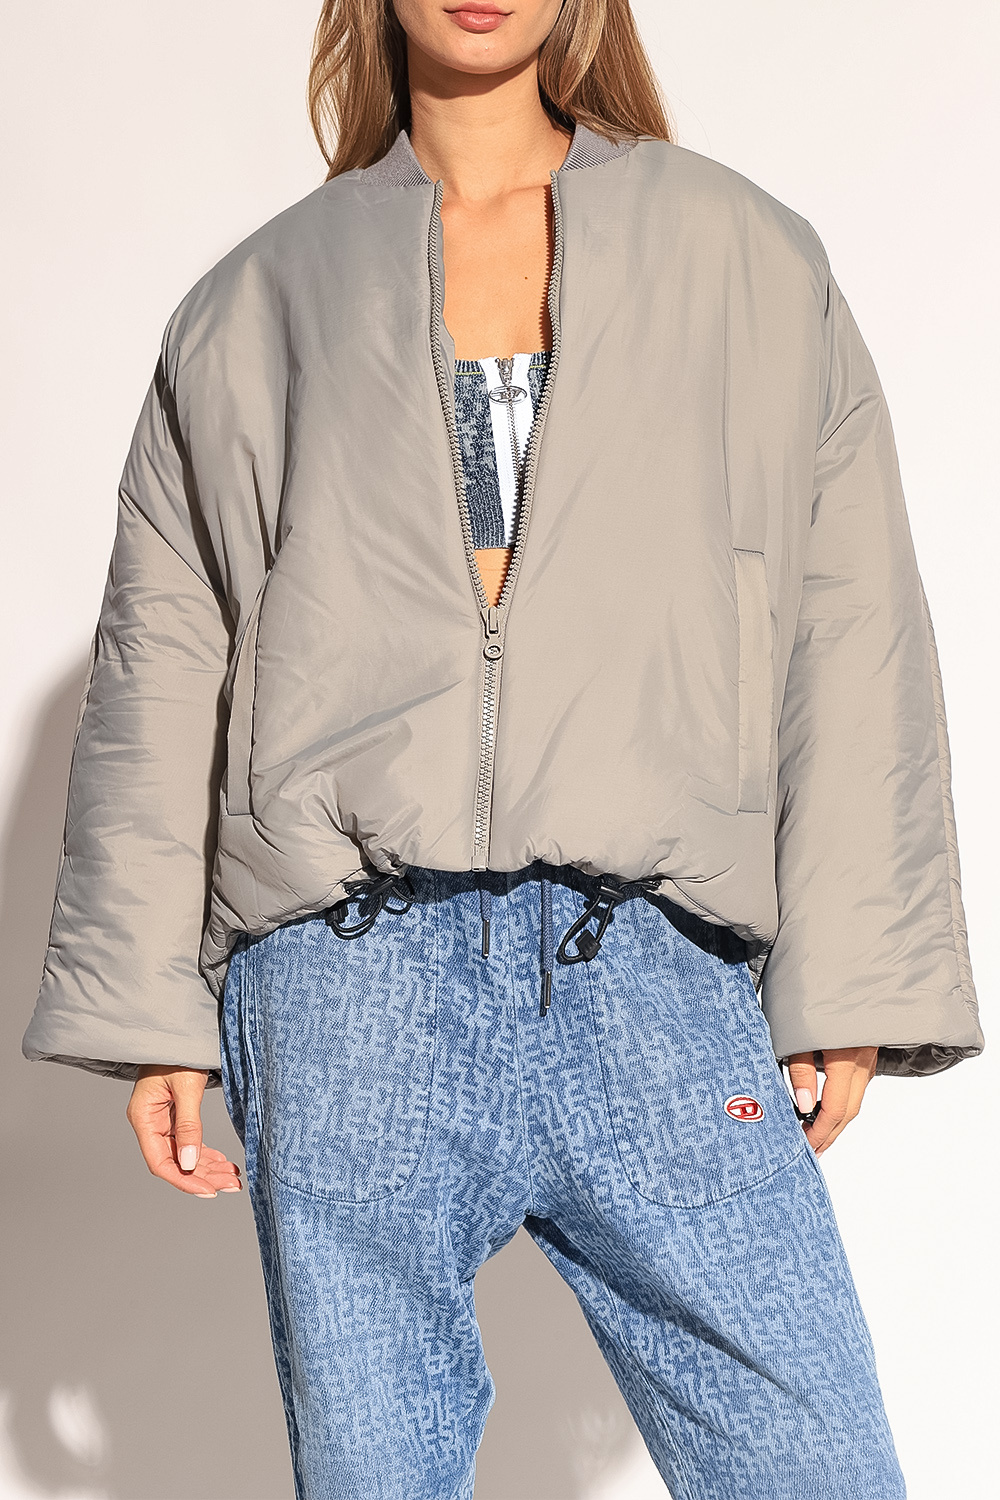 Diesel ‘W-DAY-NY’ oversize jacket | Women's Clothing | Vitkac